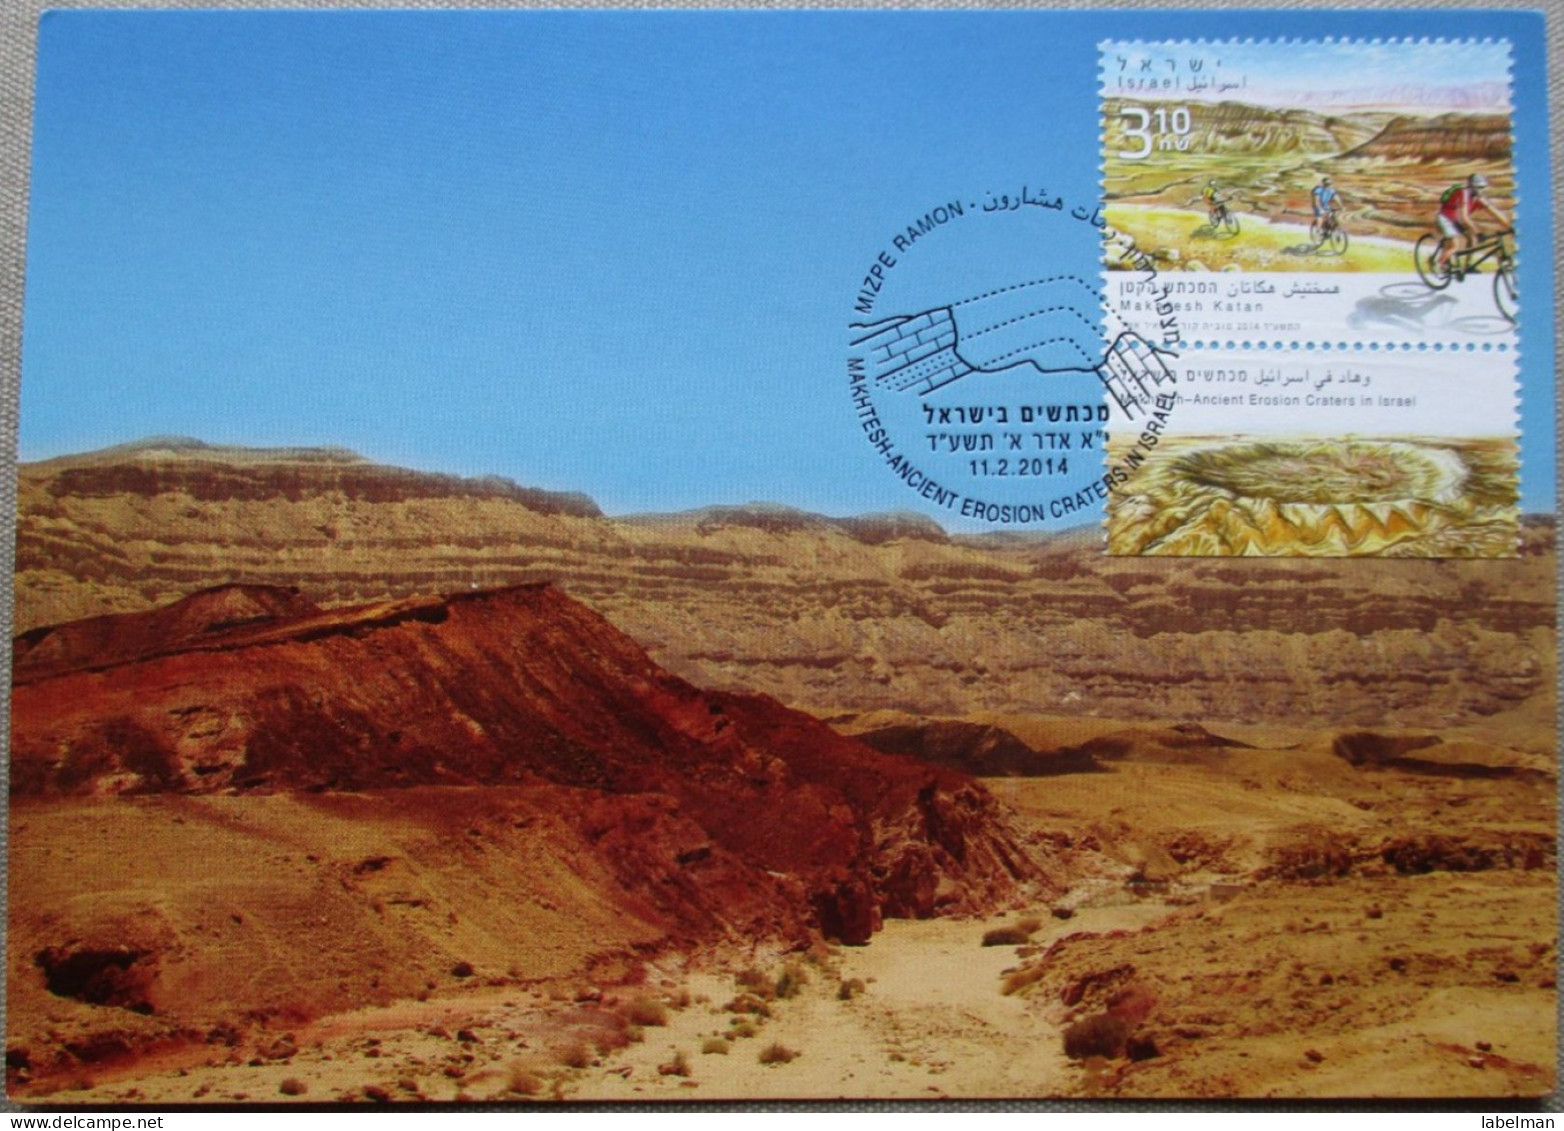 ISRAEL 2014 MIZPE RAMON CRATER DESERT PALPHOT MAXIMUM CARD STAMP FIRST DAY OF ISSUE POSTCARD CARTE POSTALE POSTKARTE - Maximumkarten